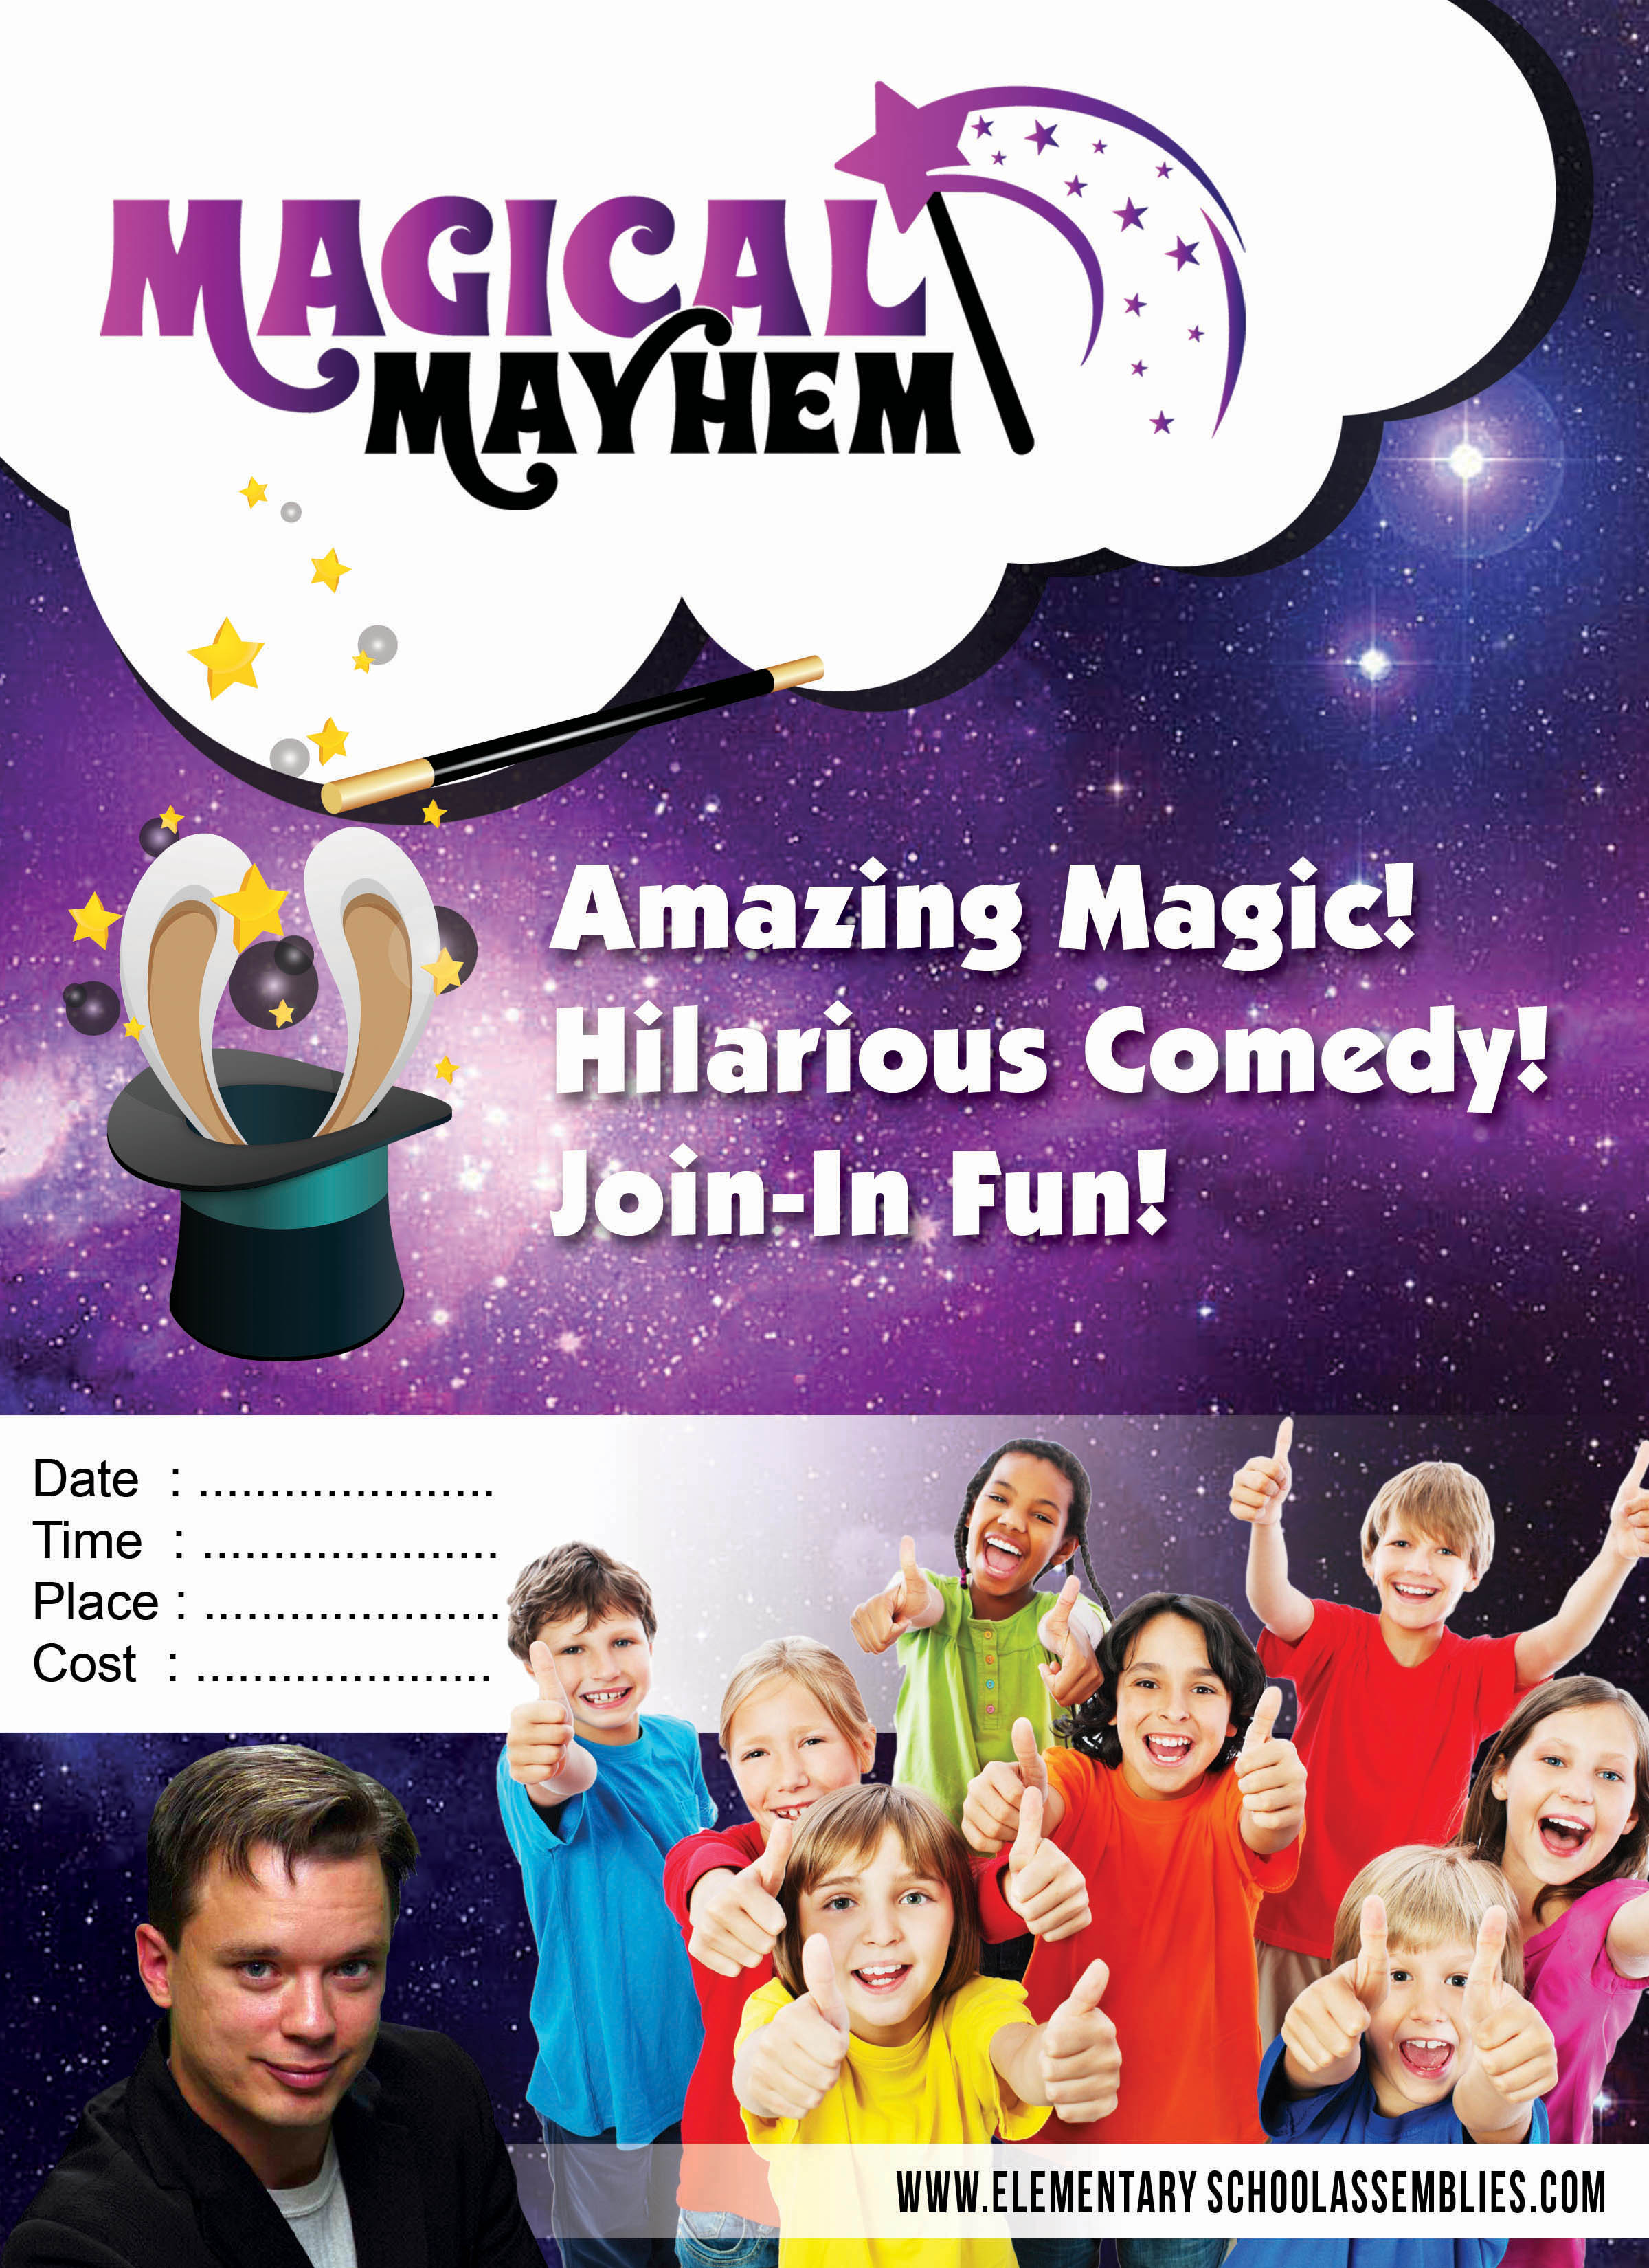 PTA fun night school assembly magic show flyer